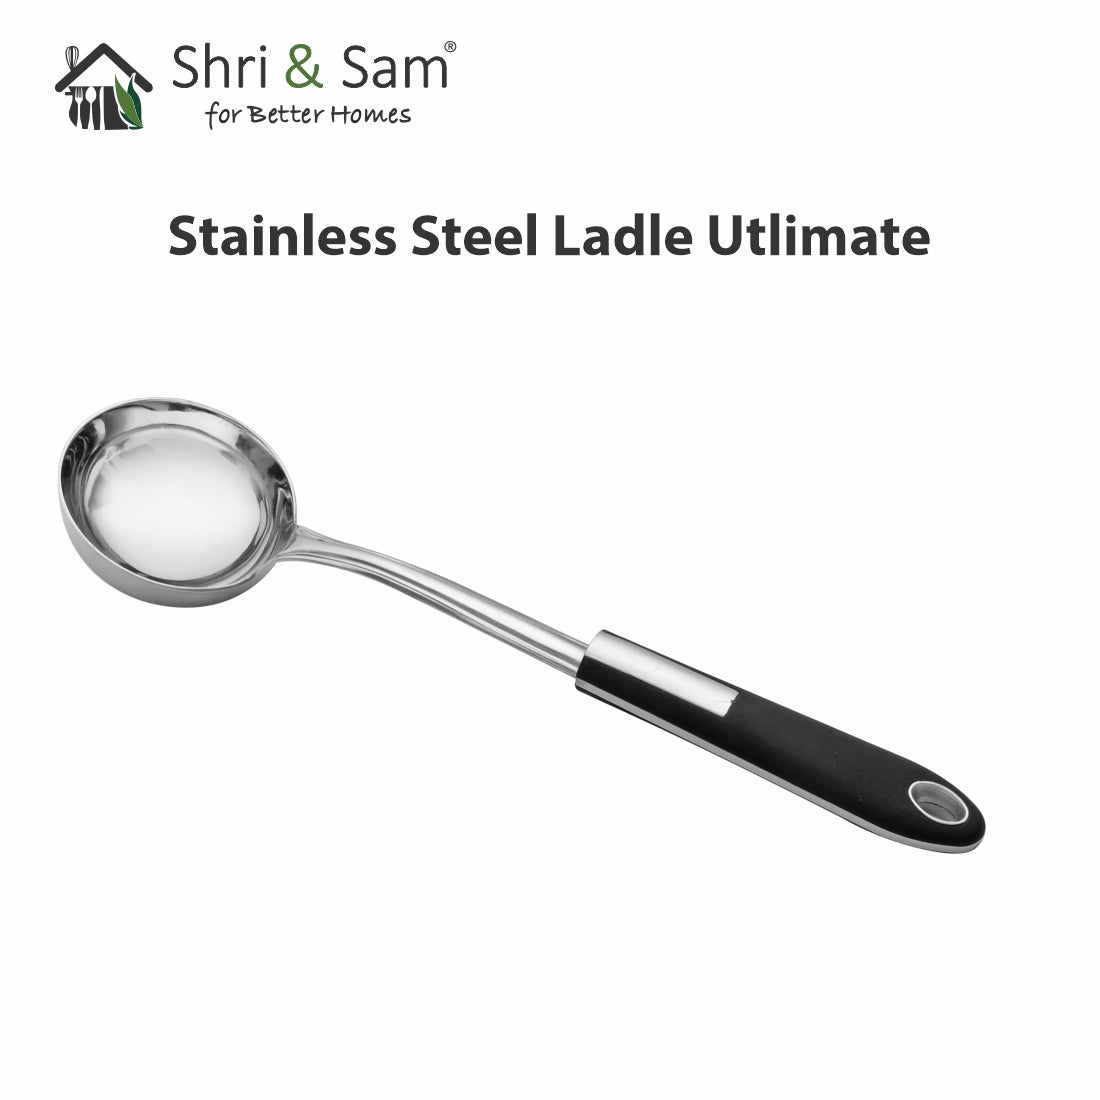 Stainless Steel Ladle Utlimate